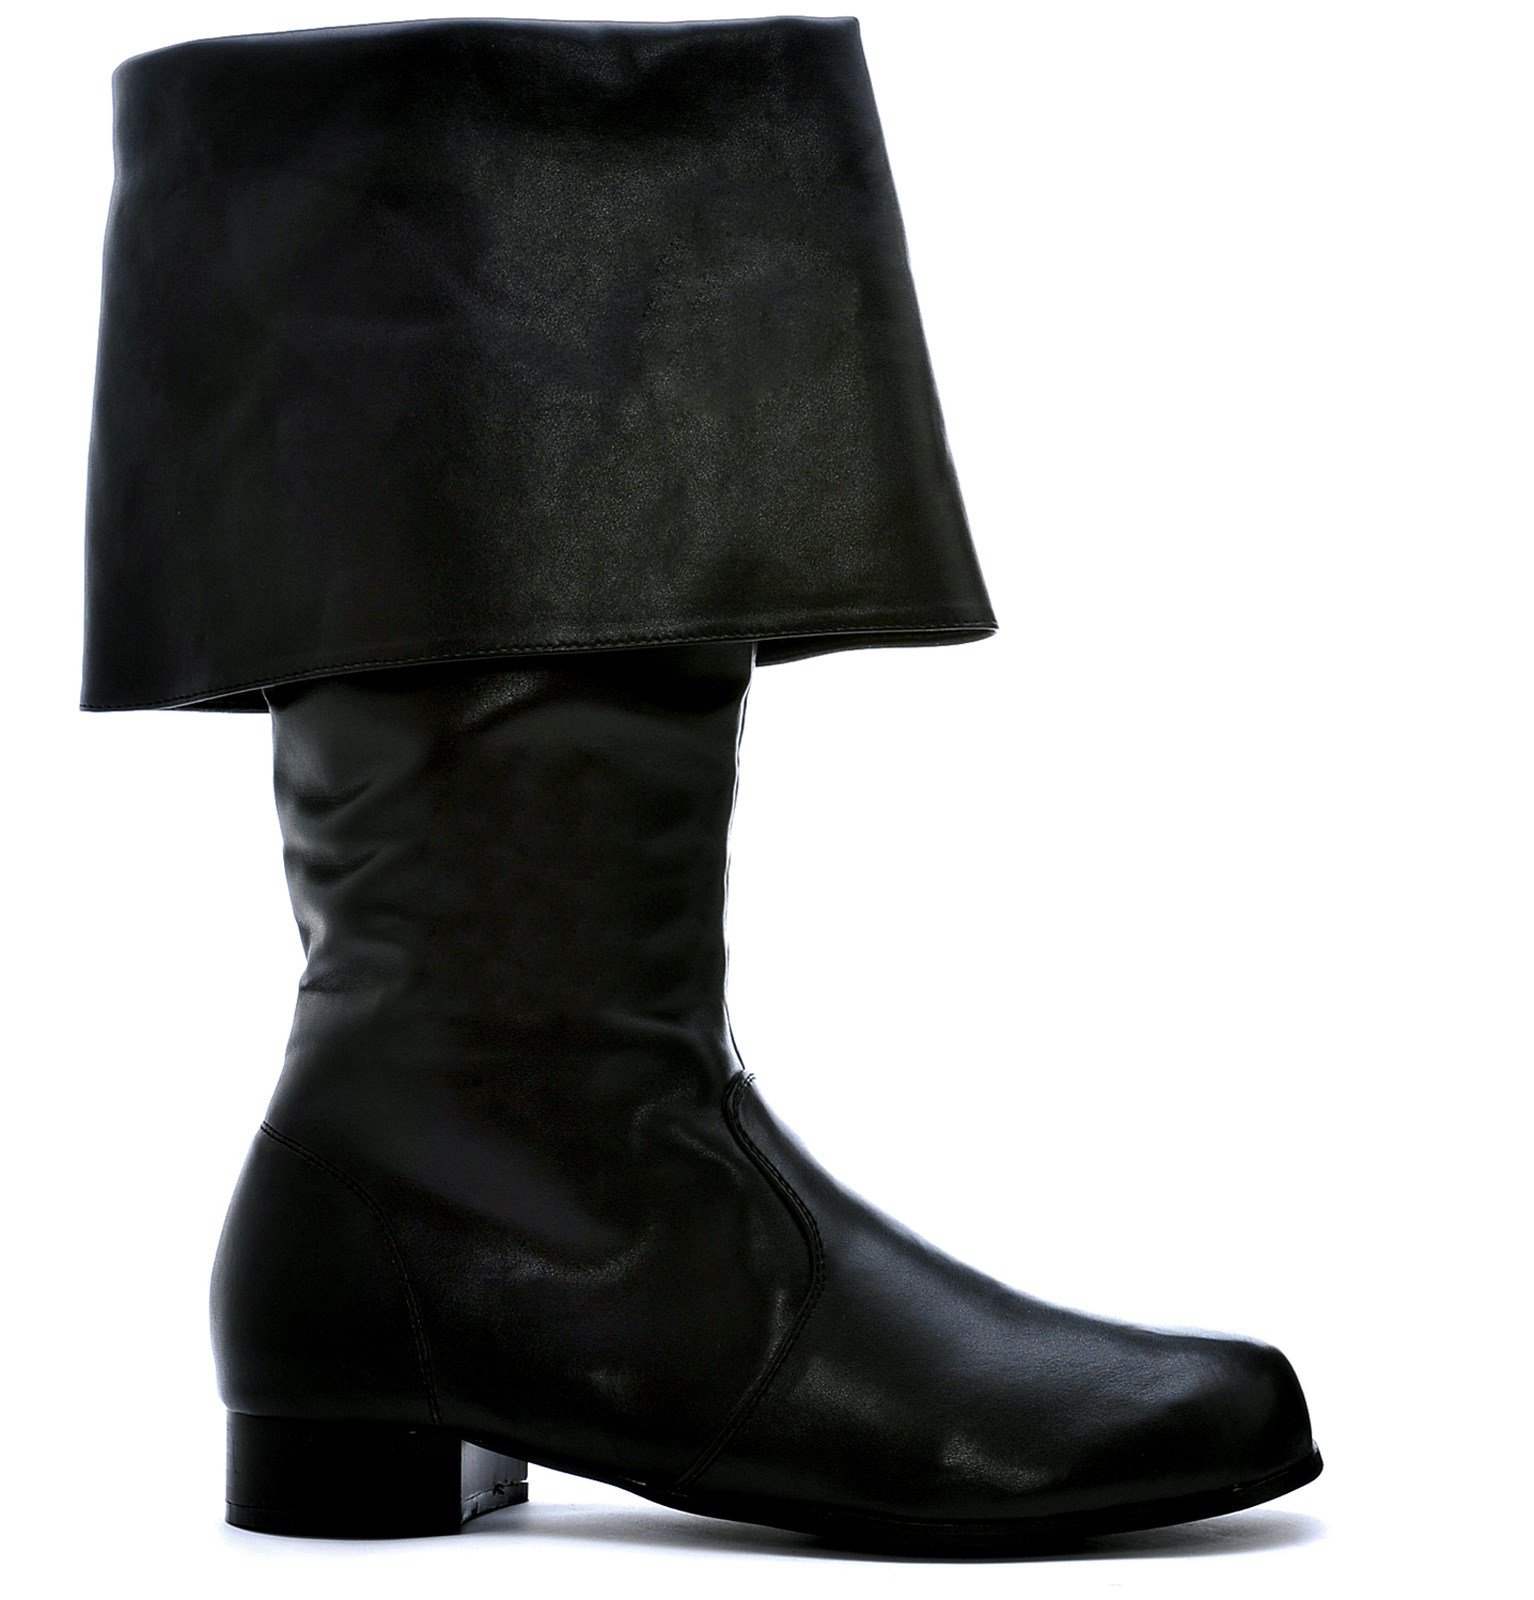 Hook Black Adult Boots